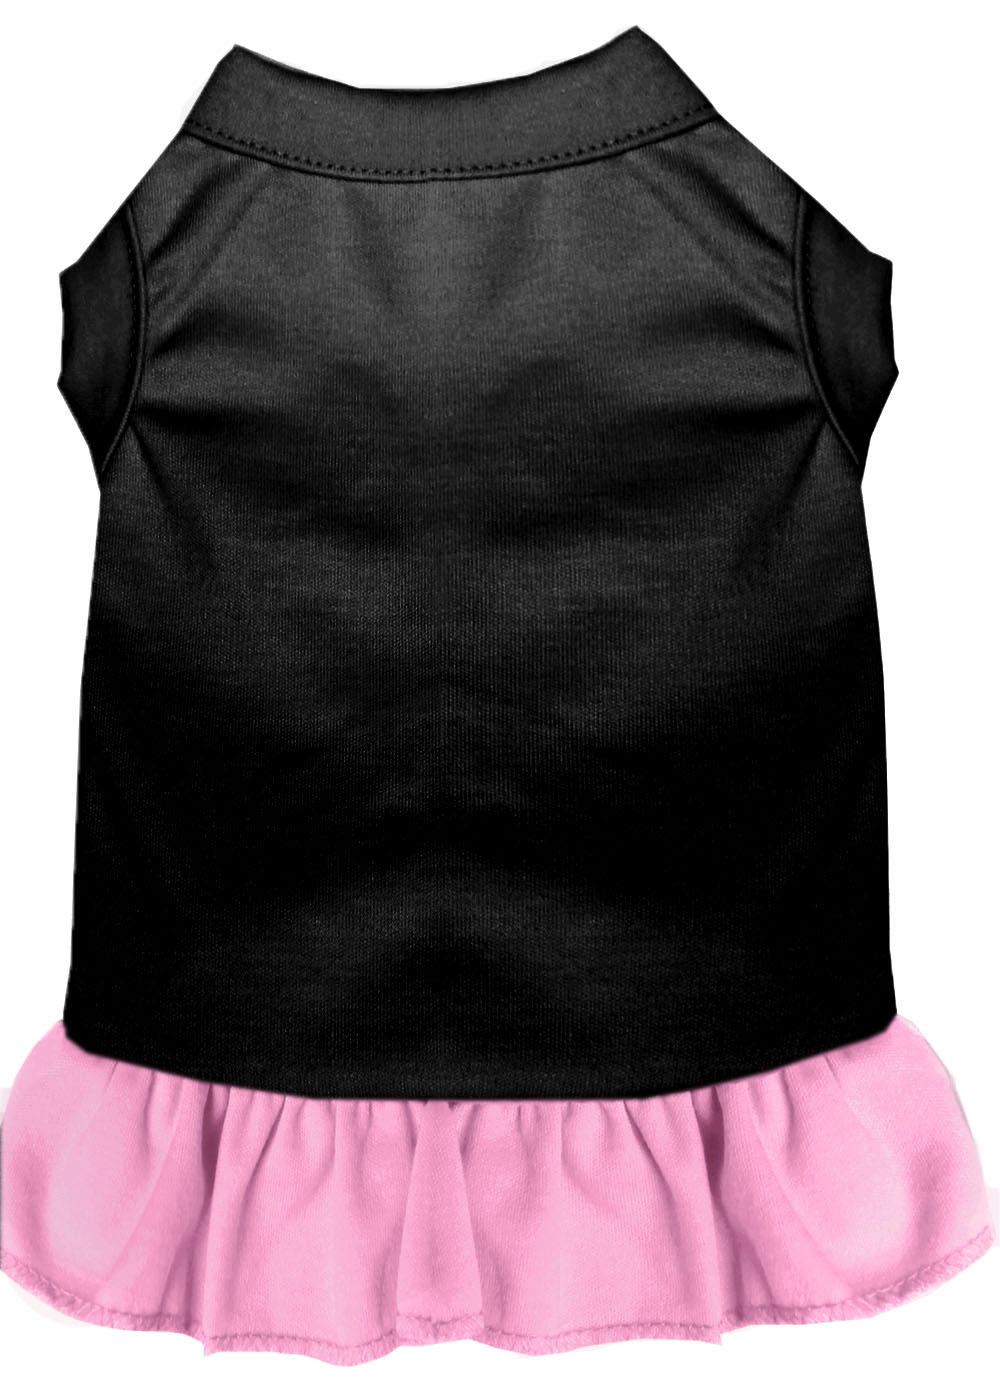 Plain Pet Dress Black with Light Pink Sm